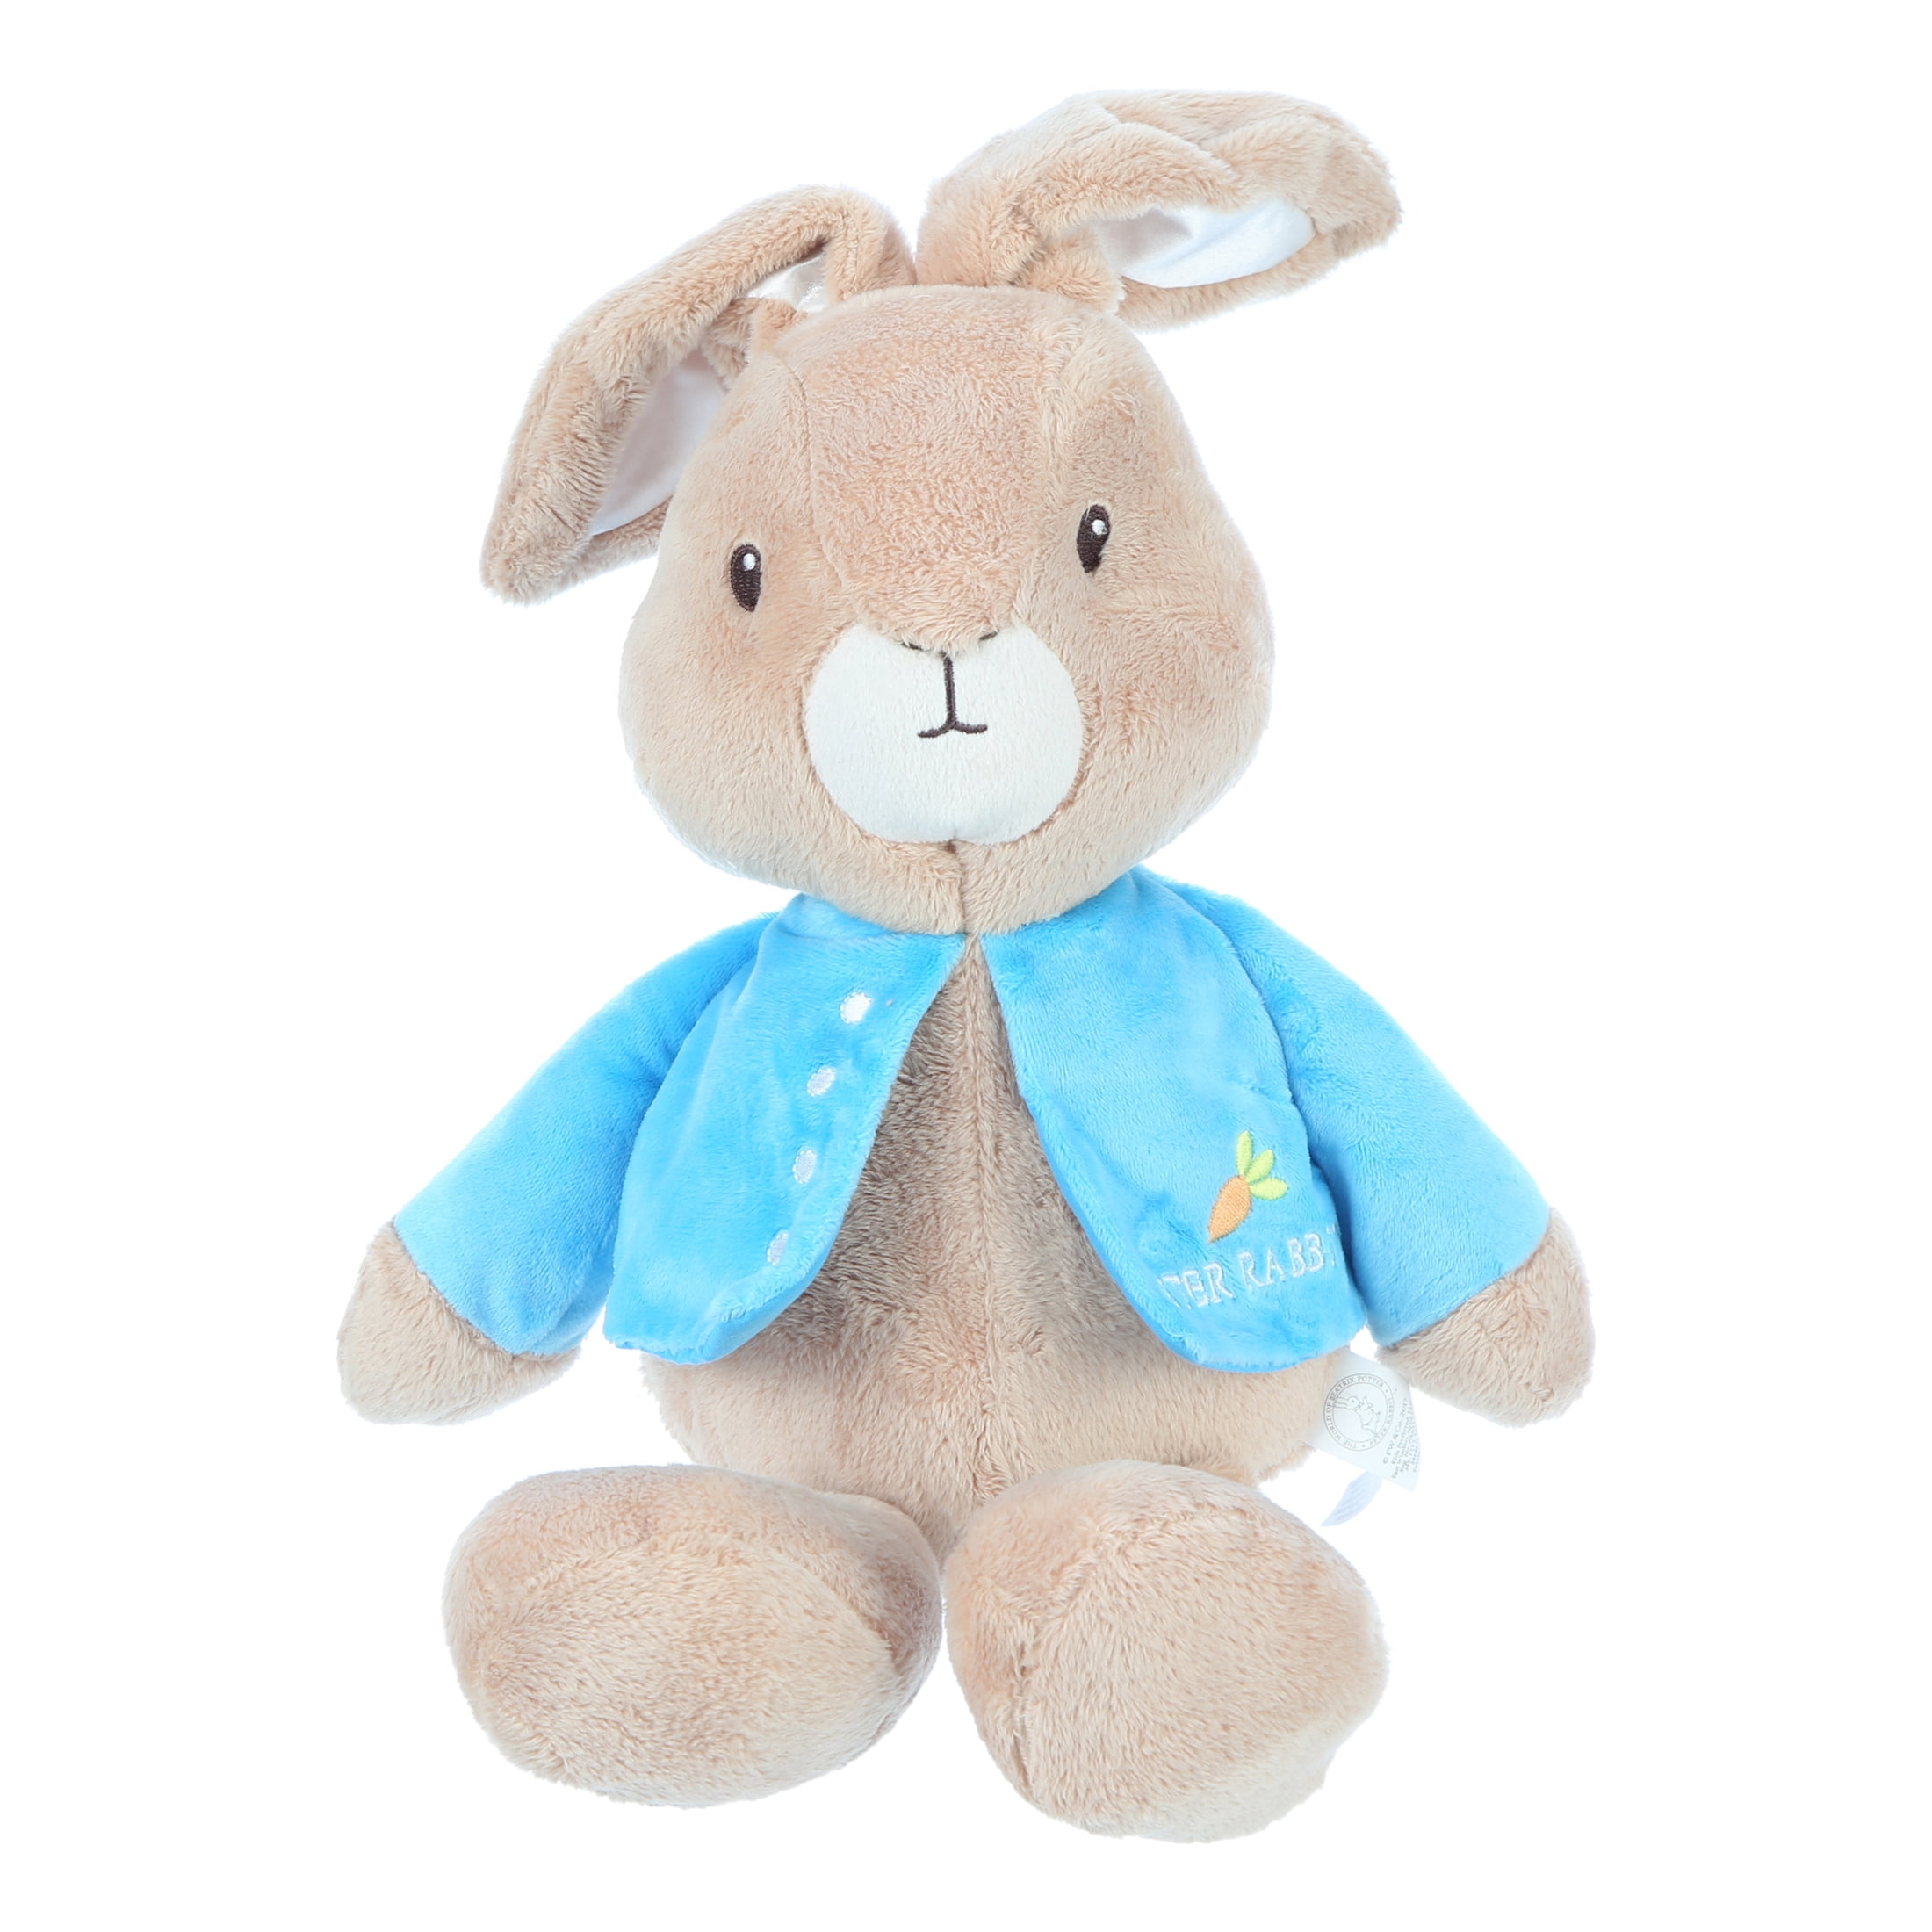 Peter Rabbit 10” Flopsy Bunny Plush Beatrix Potters Kids Preferred Easter 2017 for sale online 